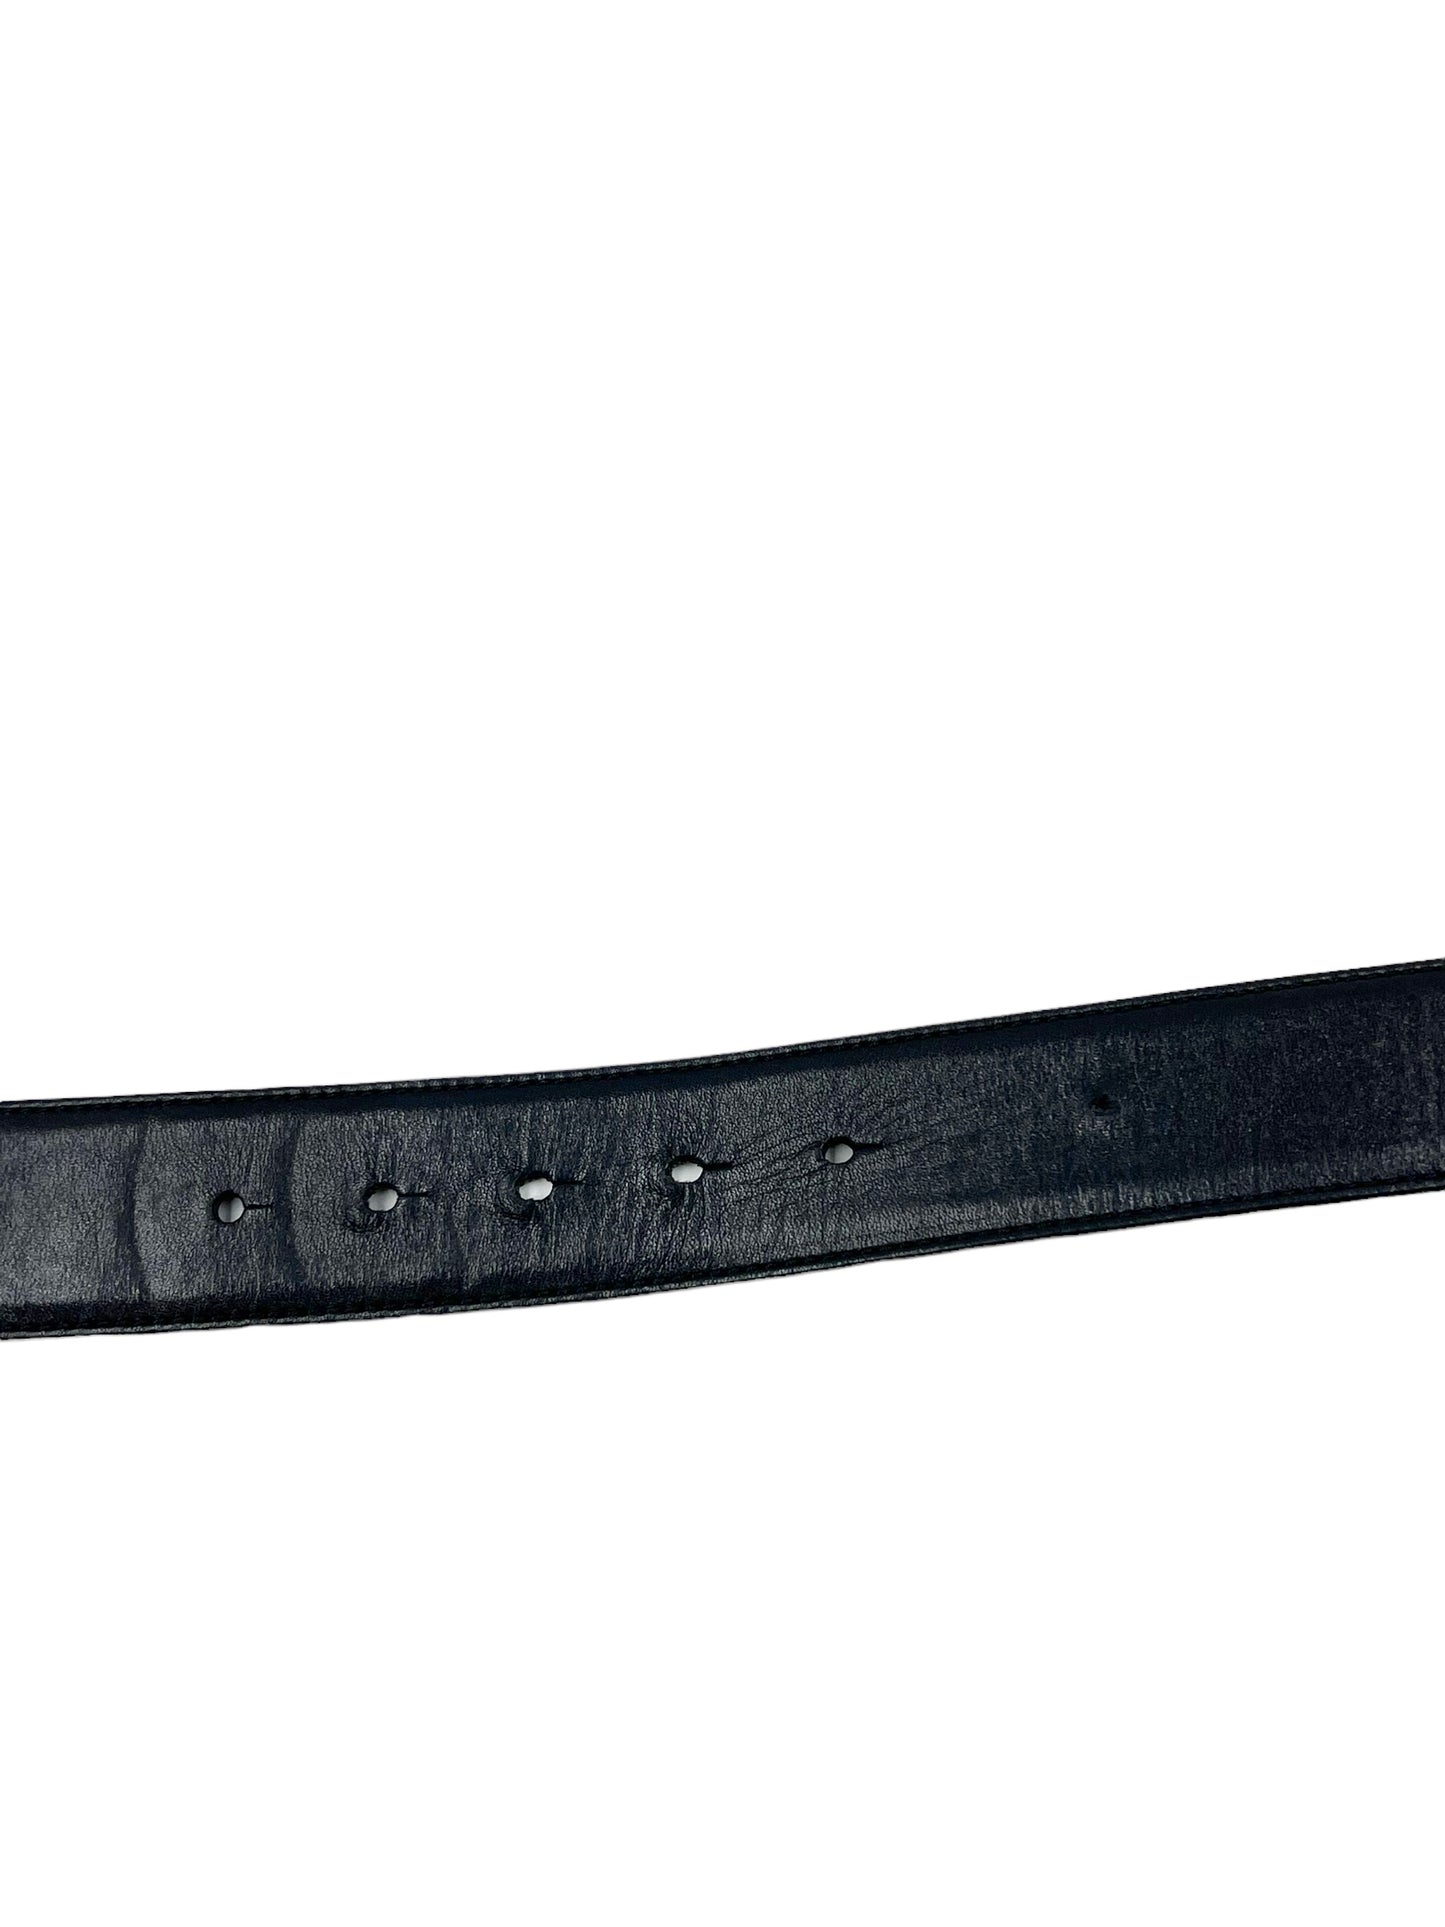 Versace Black Size 90/38 Large Round Medusa Leather Buckle Belt